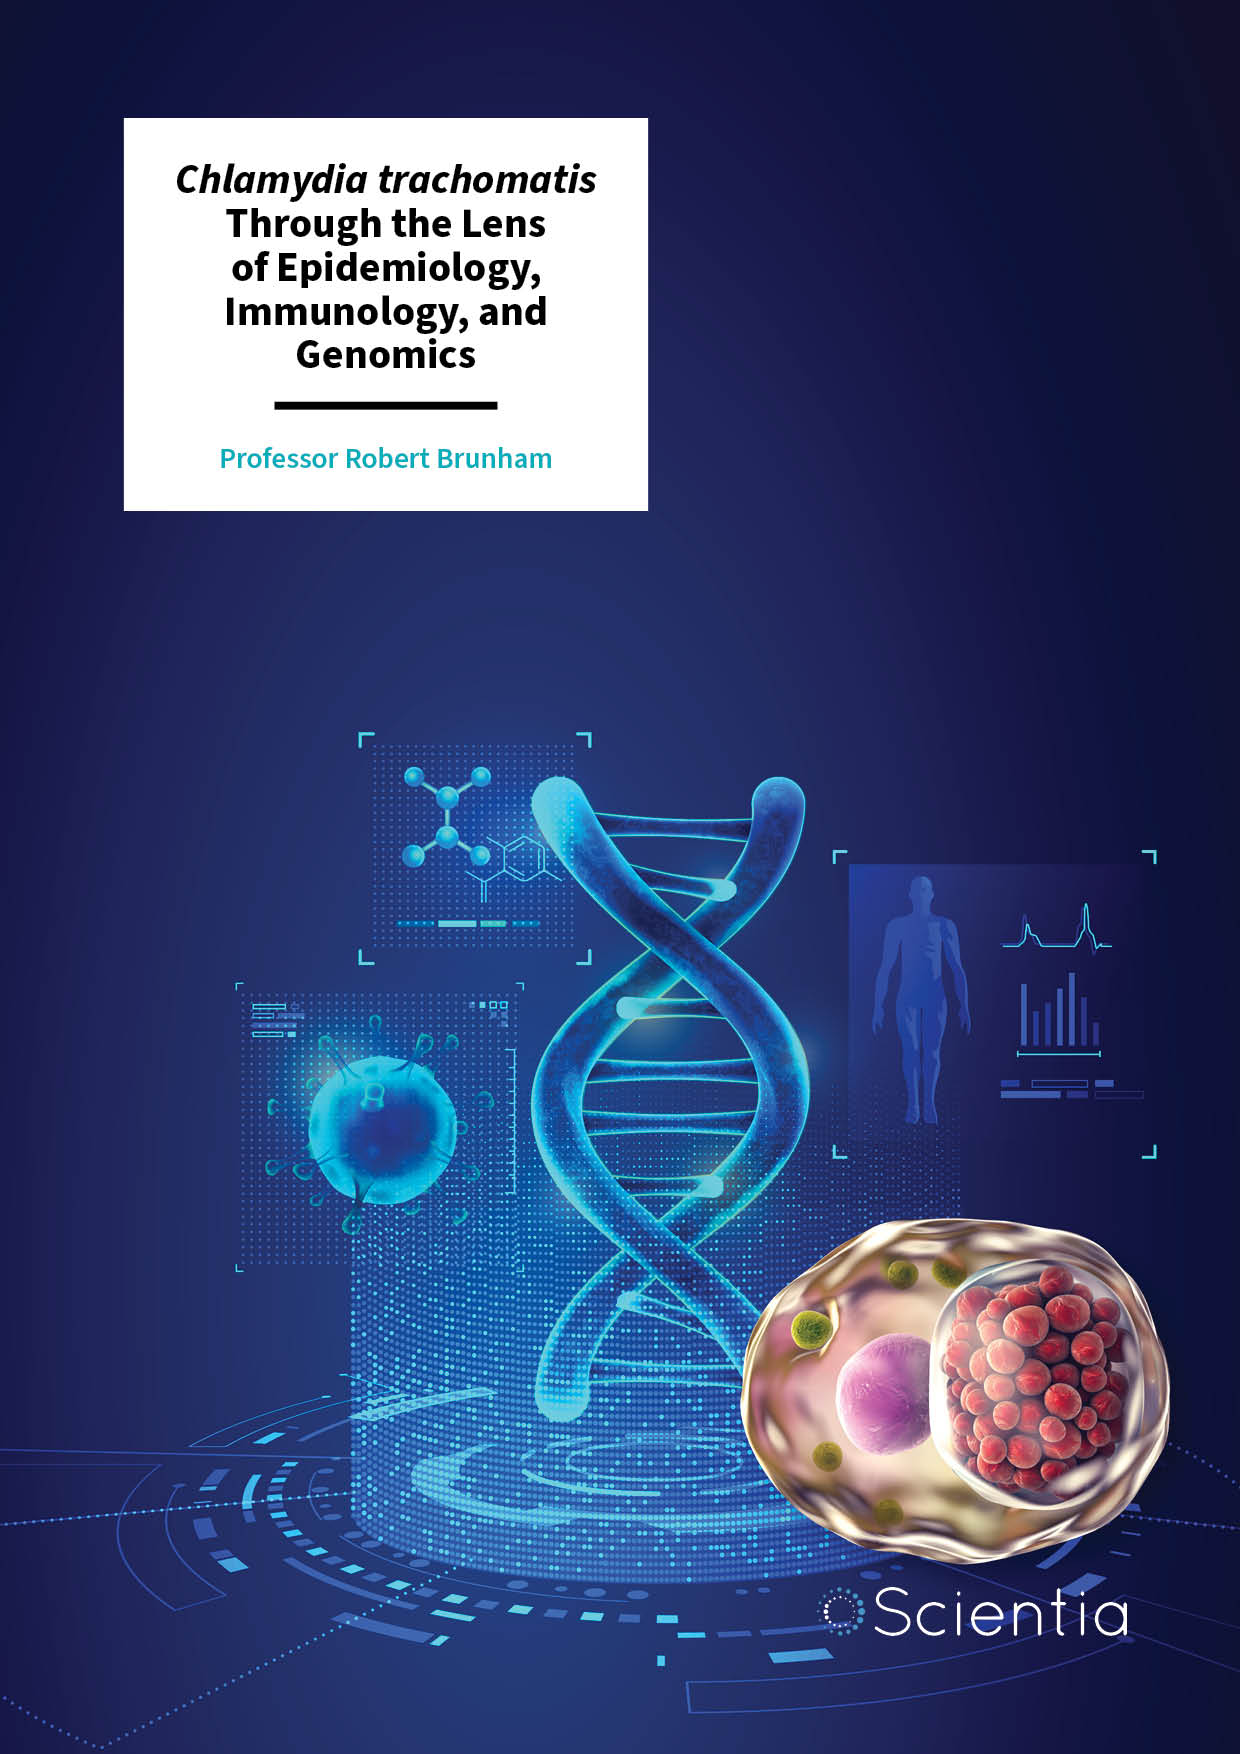 Professor Robert Brunham | Chlamydia trachomatis Through the Lens of Epidemiology, Immunology, and Genomics